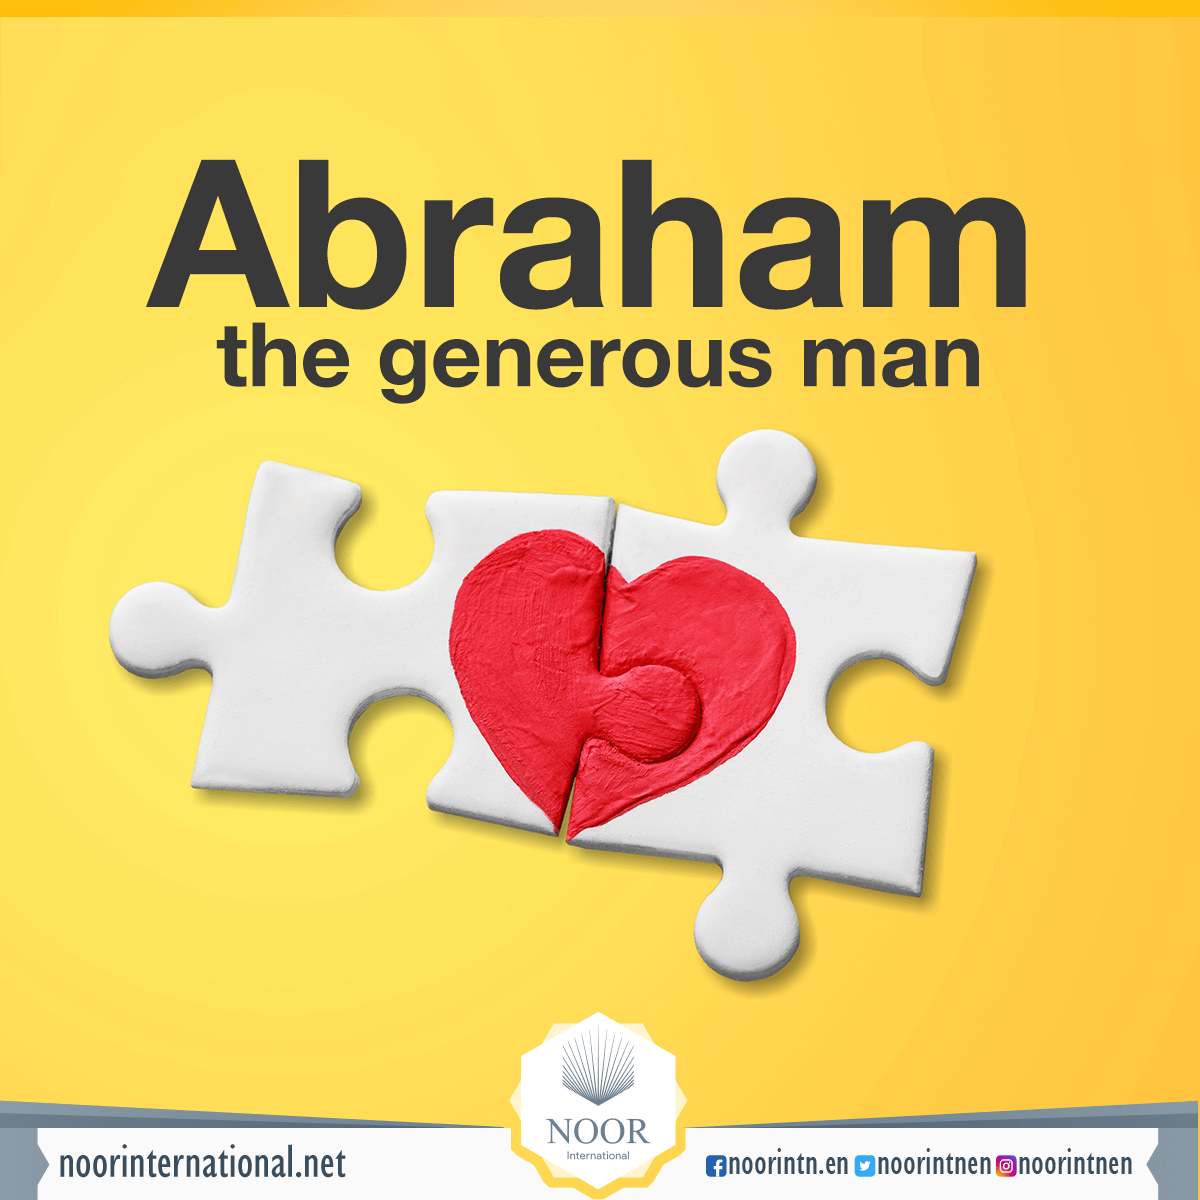 Abraham the generous man